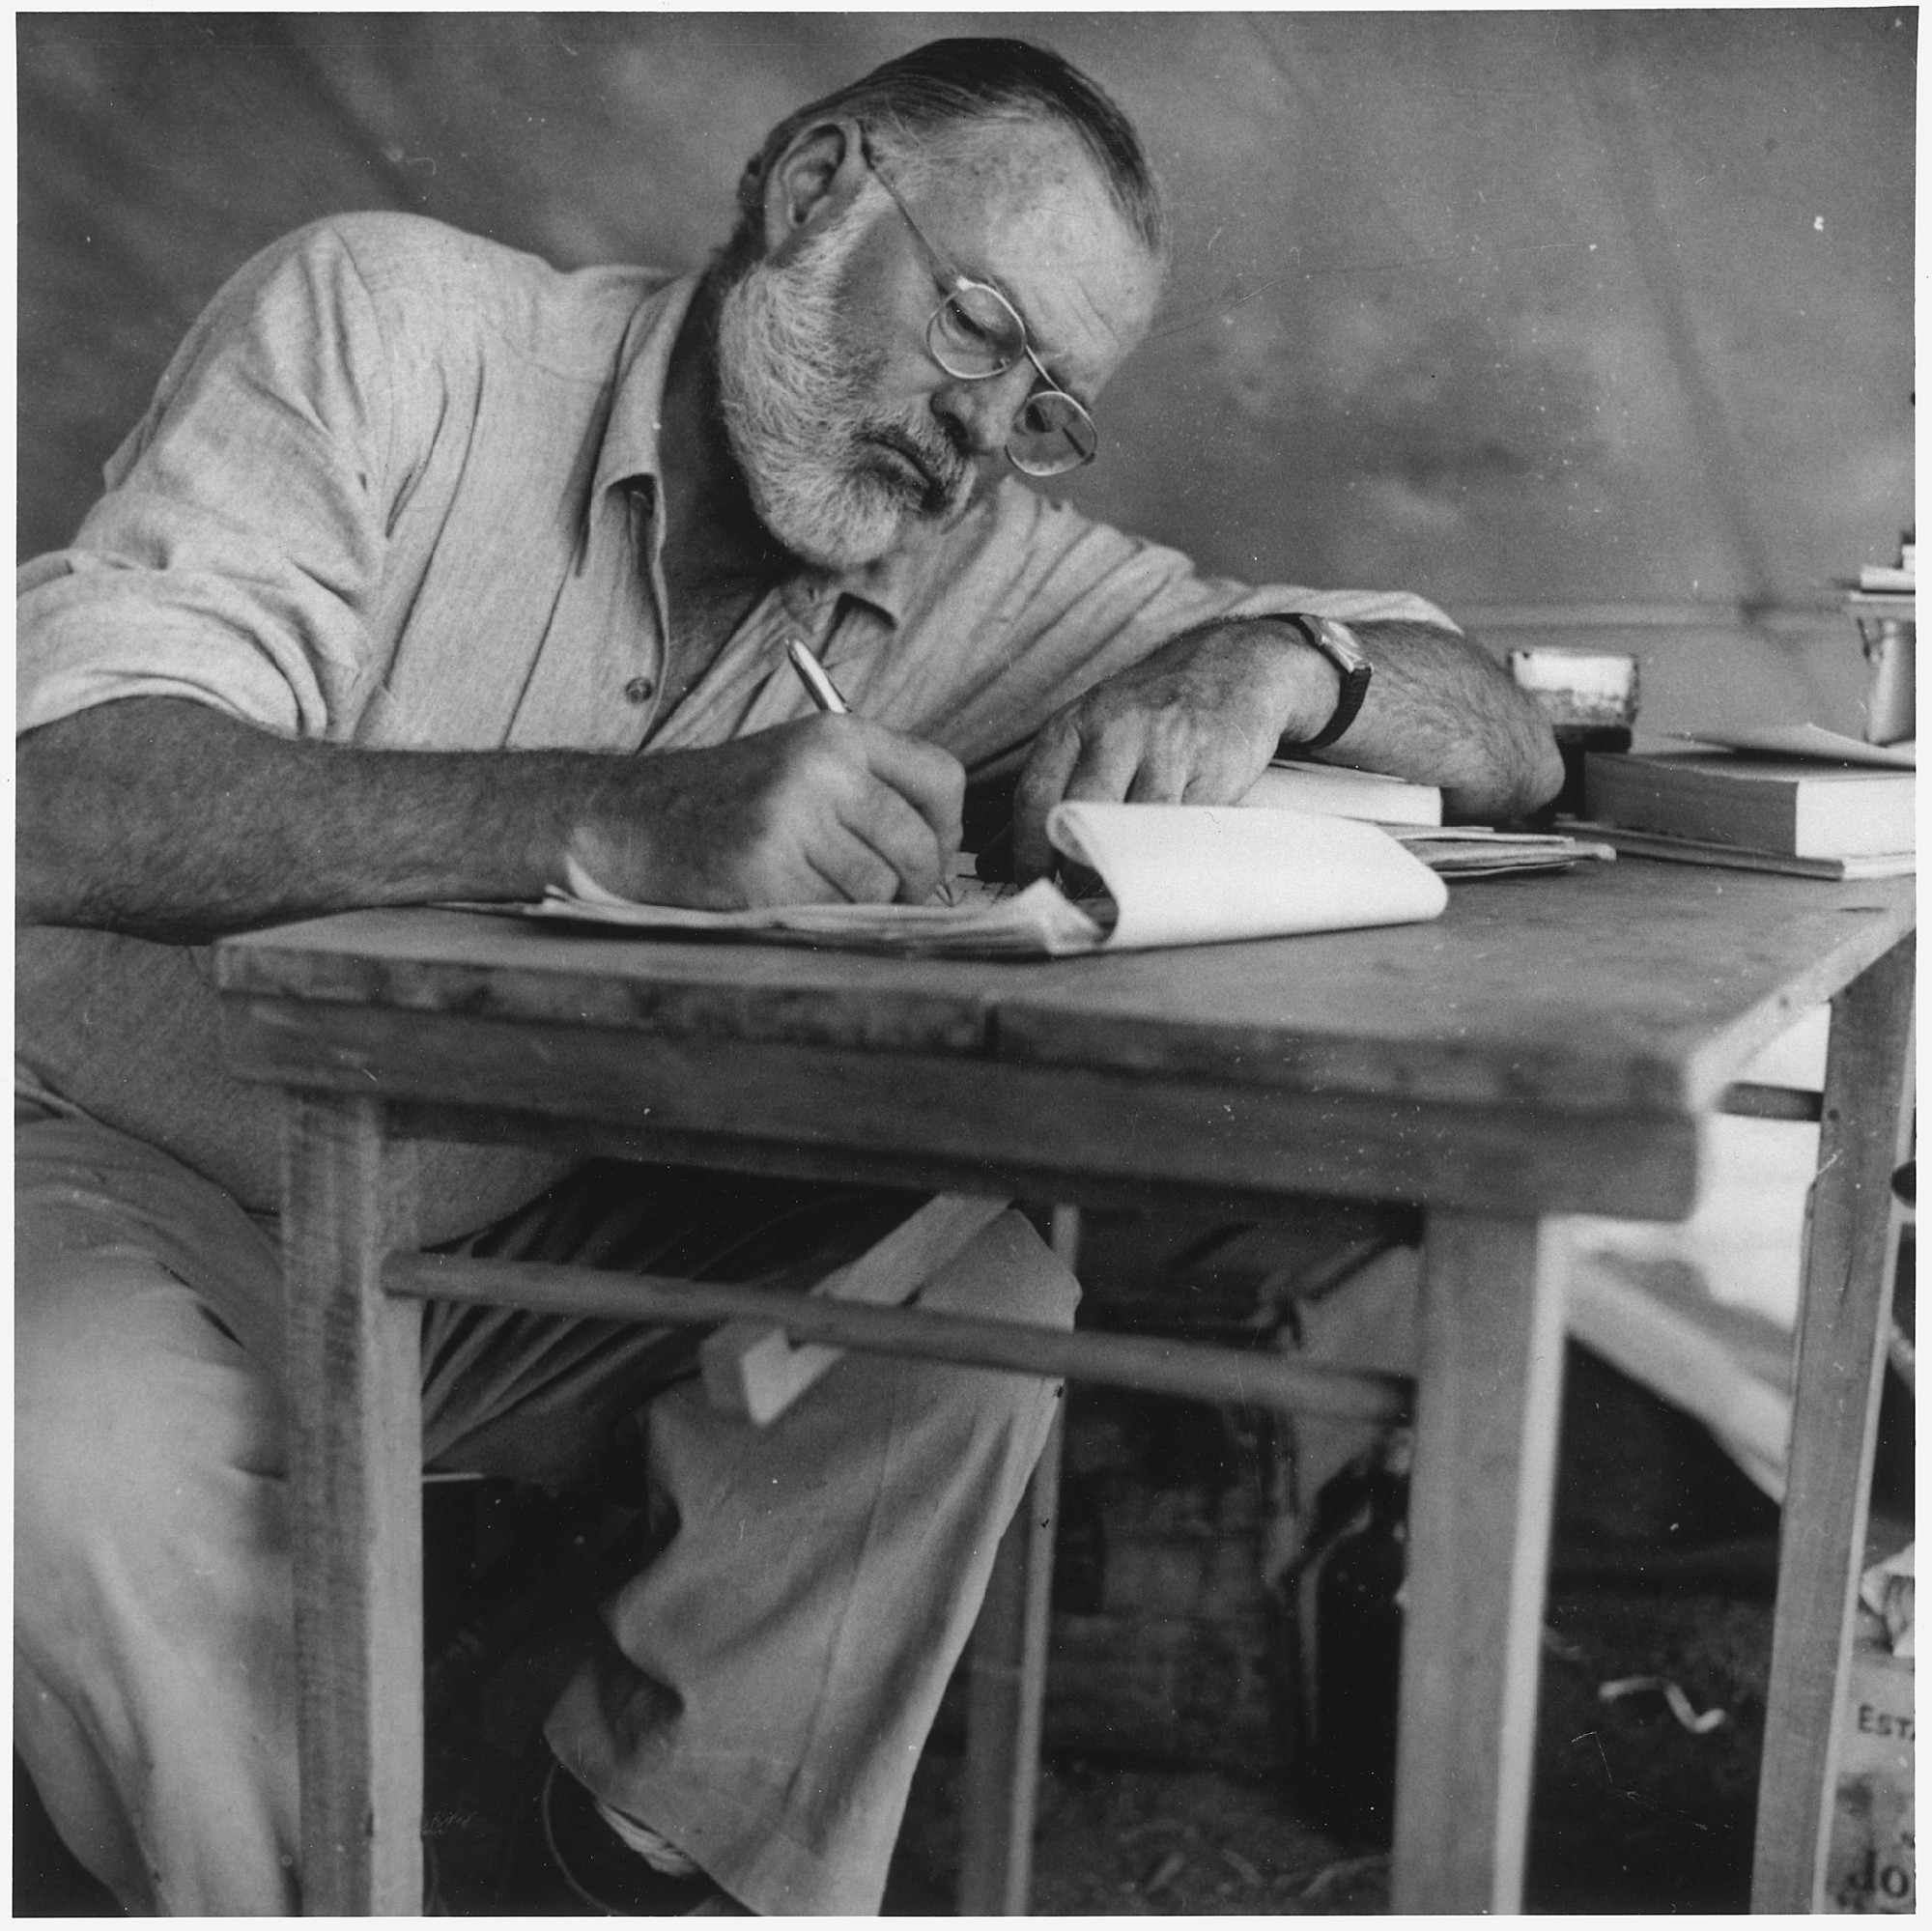 Katolikus volt-e Hemingway?